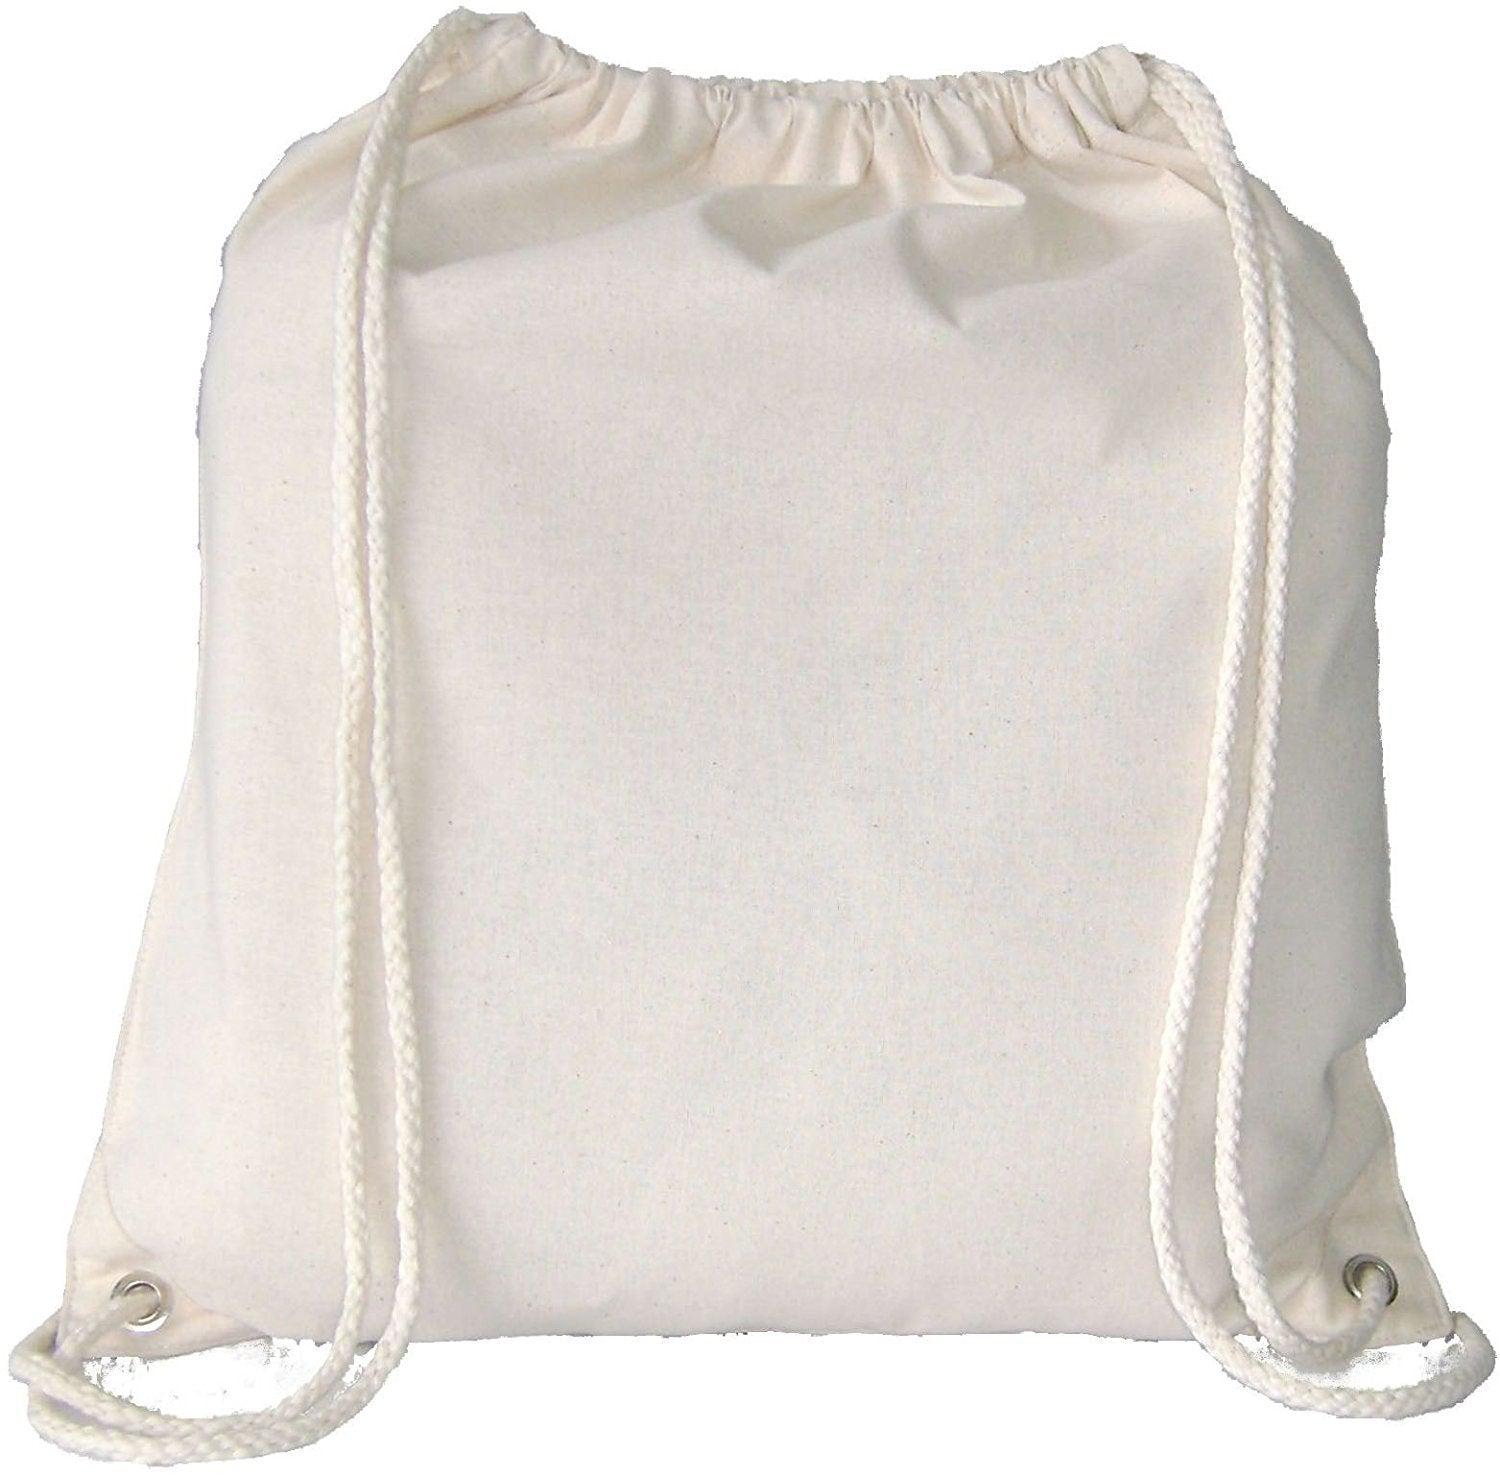 Drawstring Backpack 100% Cotton Blanks